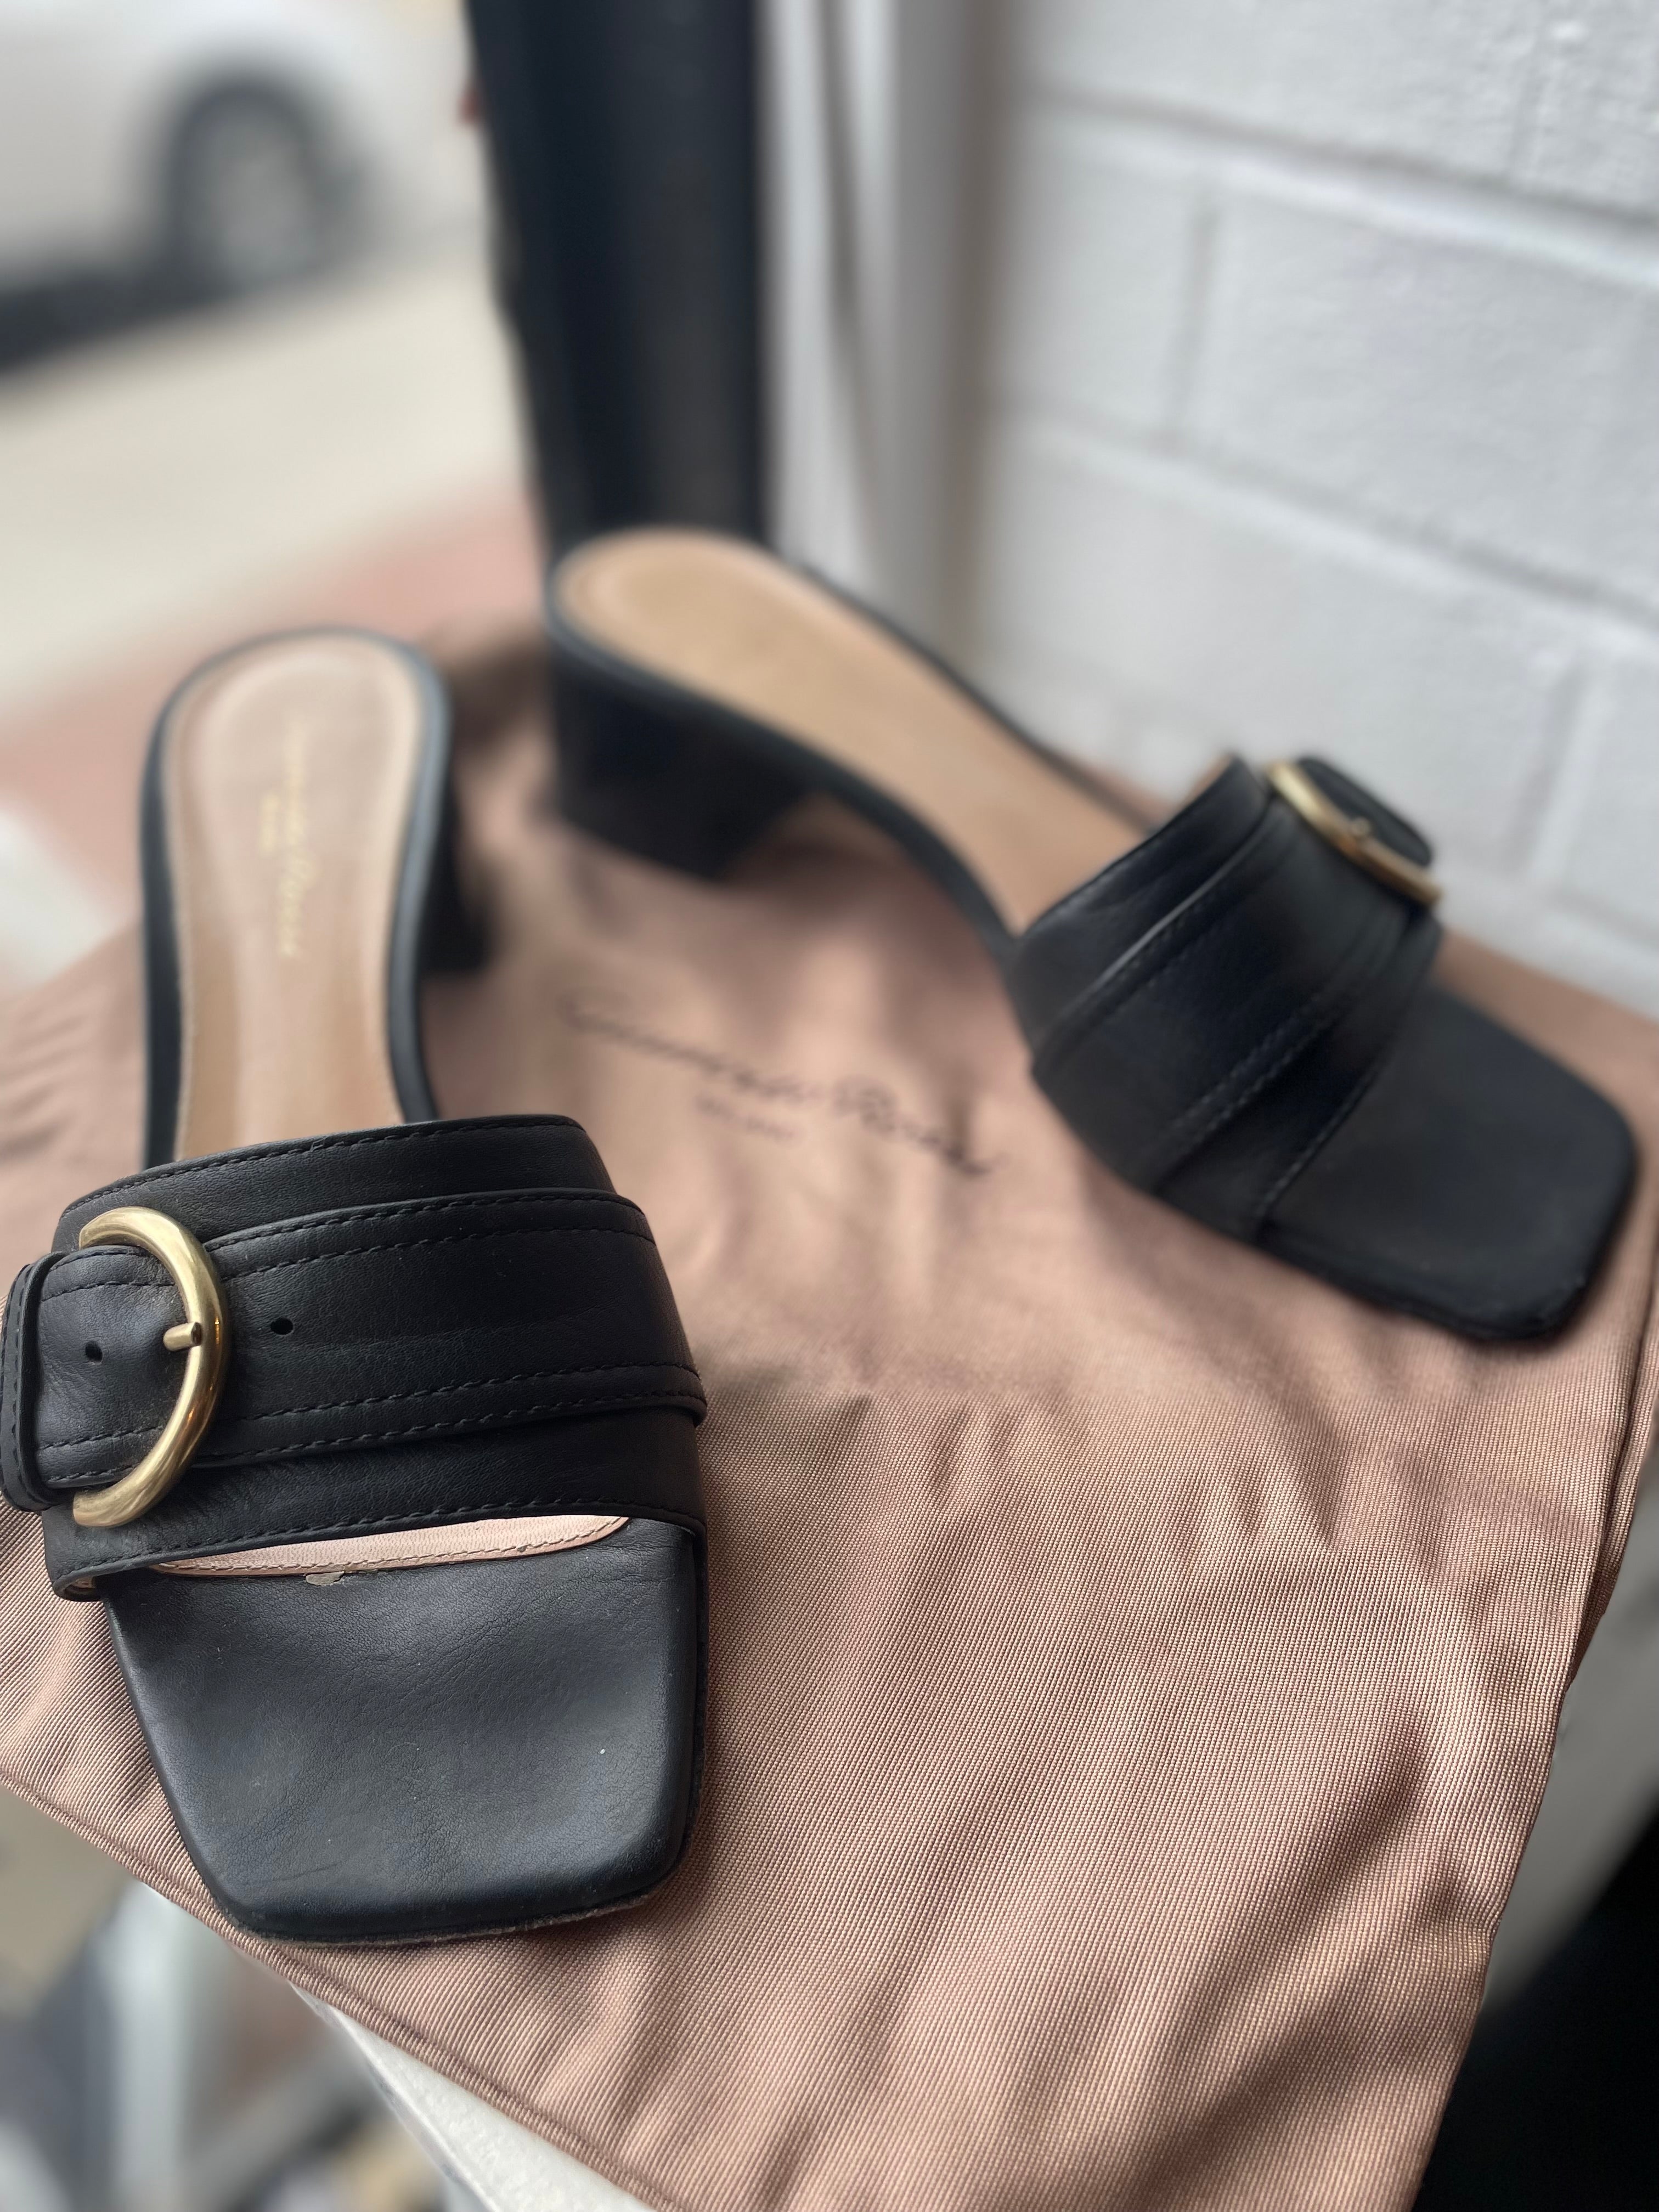 Gianvito Rossi Black Leather Sandals